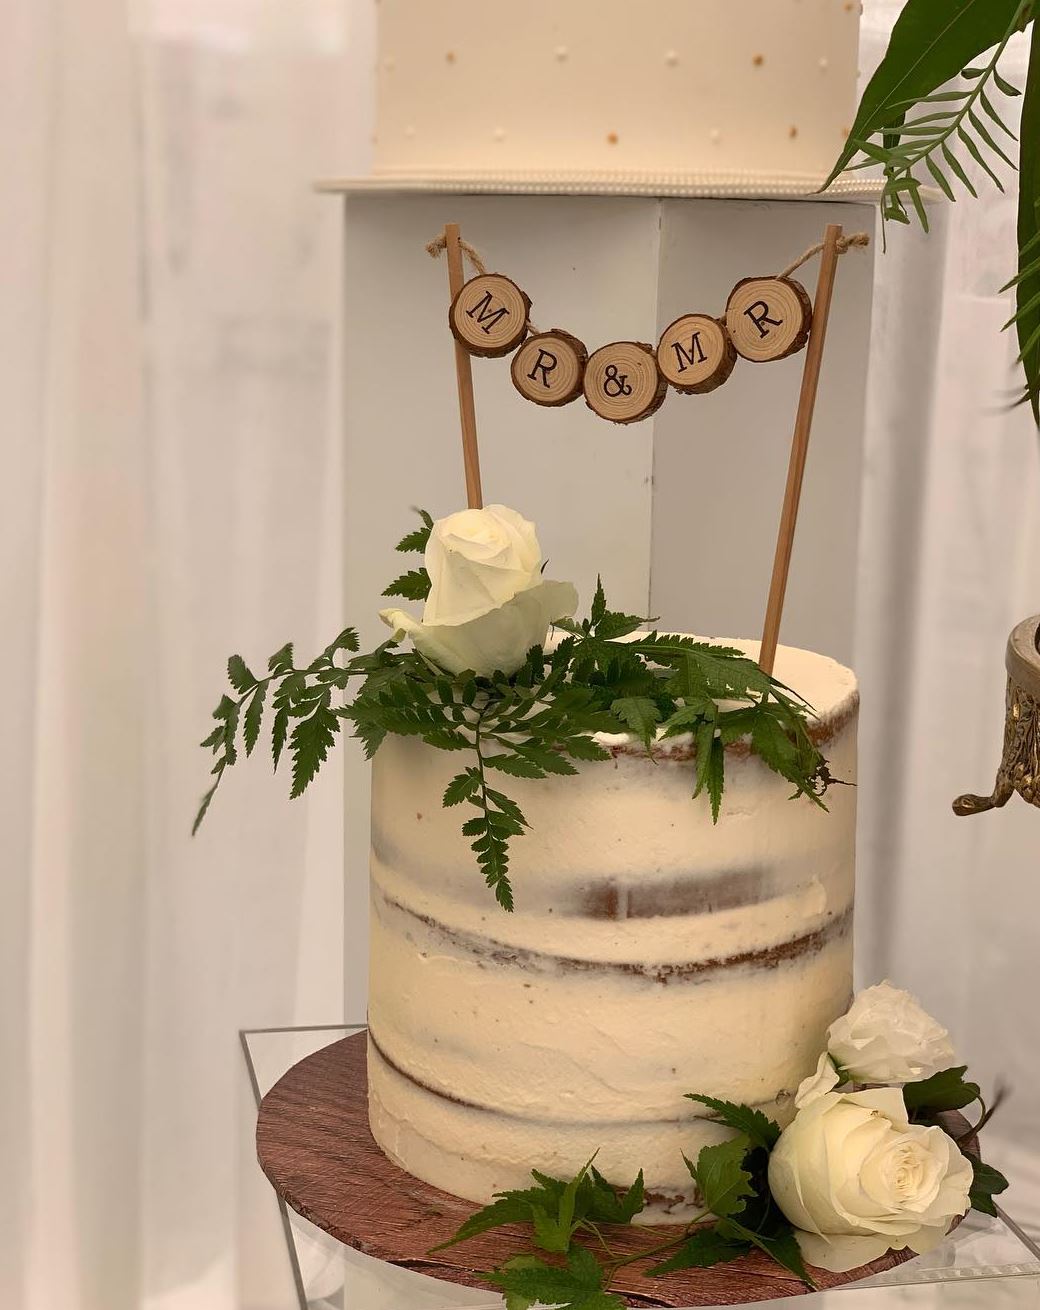 Wedding Cake Designs That Are Simply Elegant | Bridal Book FN